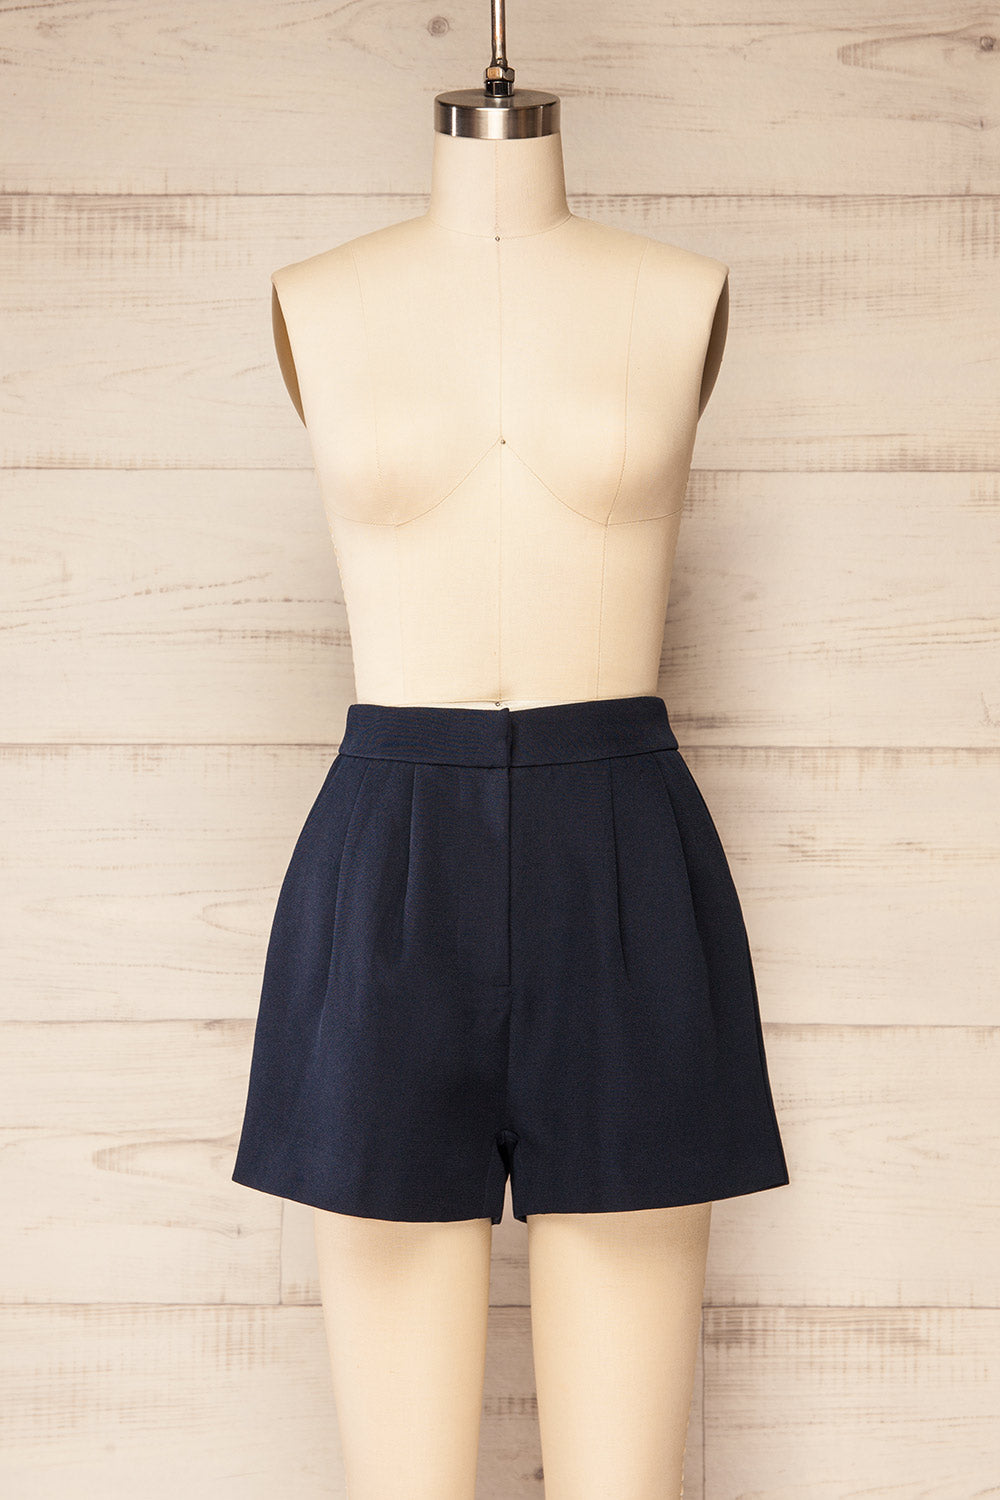 Lonsdale Navy High-Waisted Shorts w/ Pockets | La petite garçonne front view